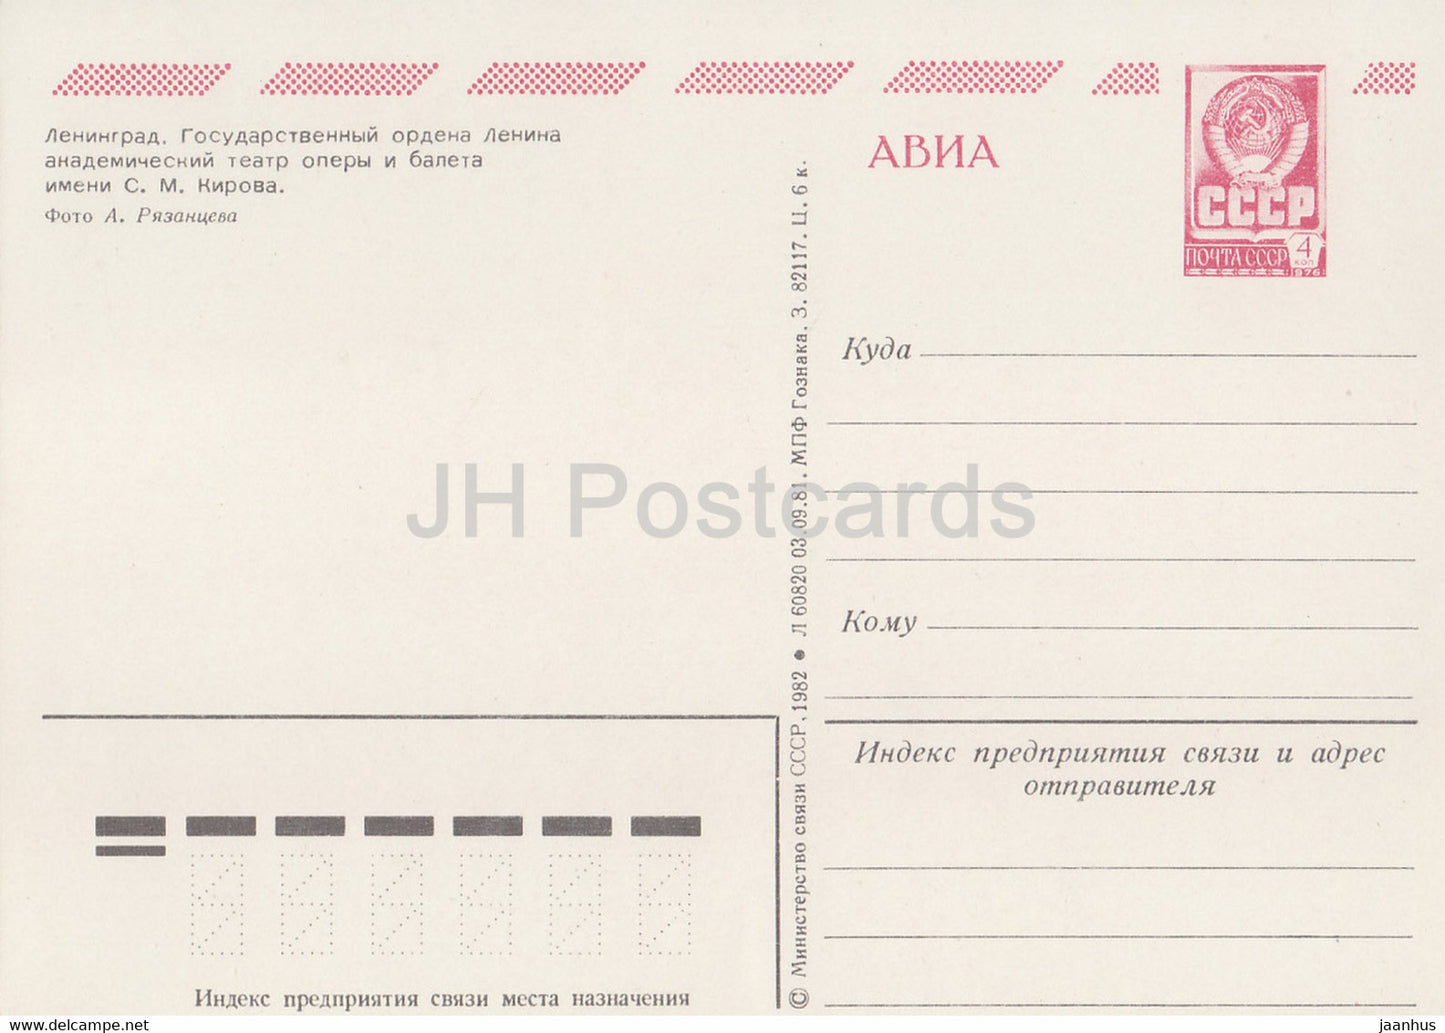 Leningrad - St Petersburg - Kirov Opera and Ballet Theatre - AVIA - postal stationery - 1982 - Russia USSR - unused